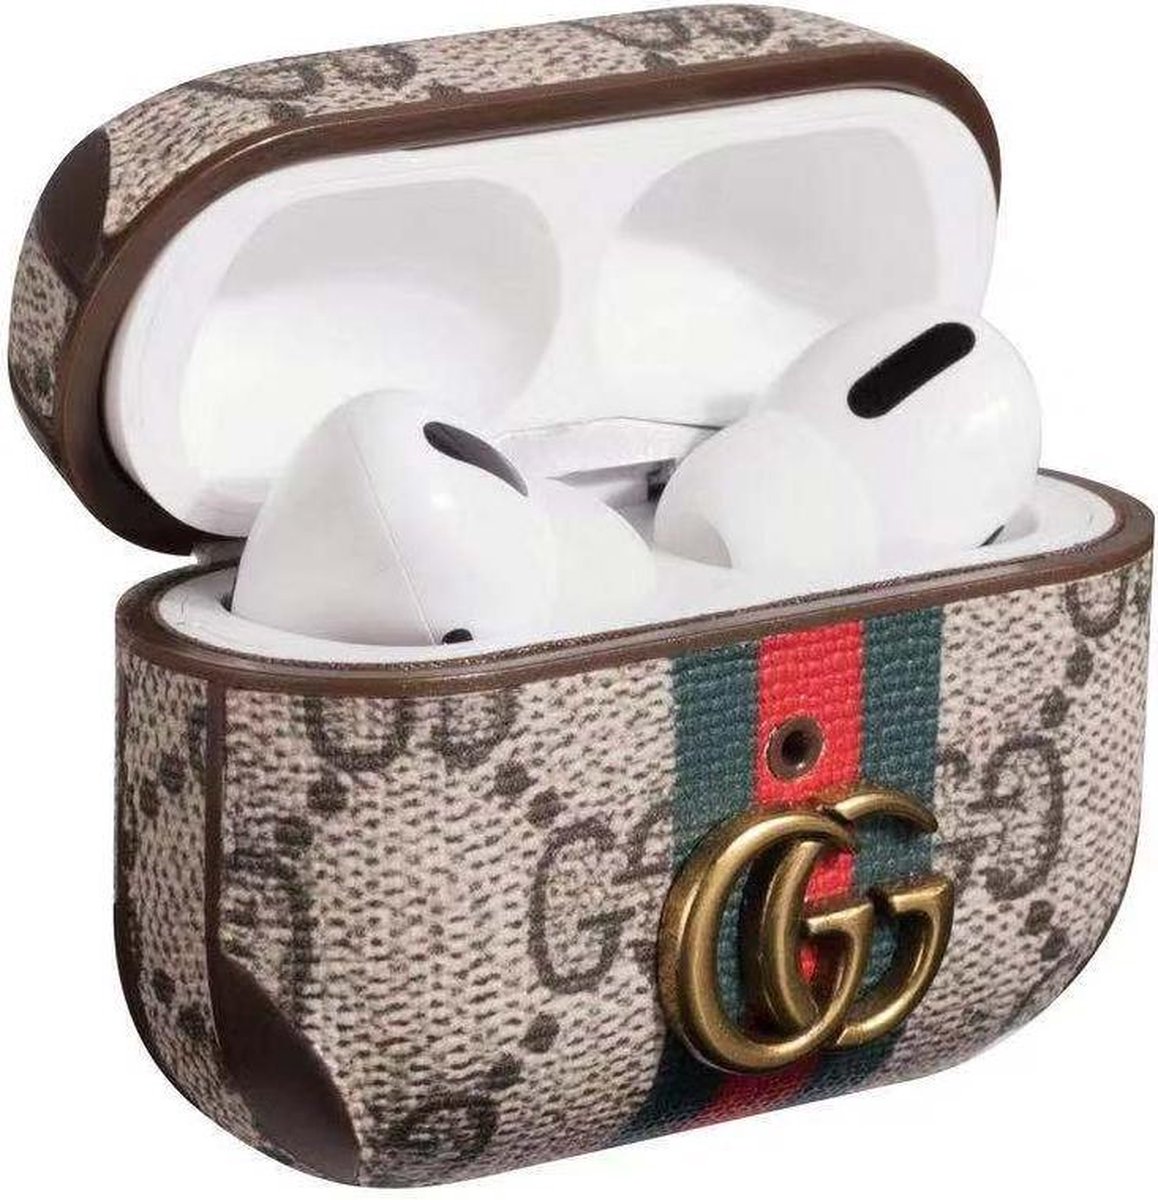 Gucci Airpod Pro Case Amazon Germany, SAVE 60% - raptorunderlayment.com